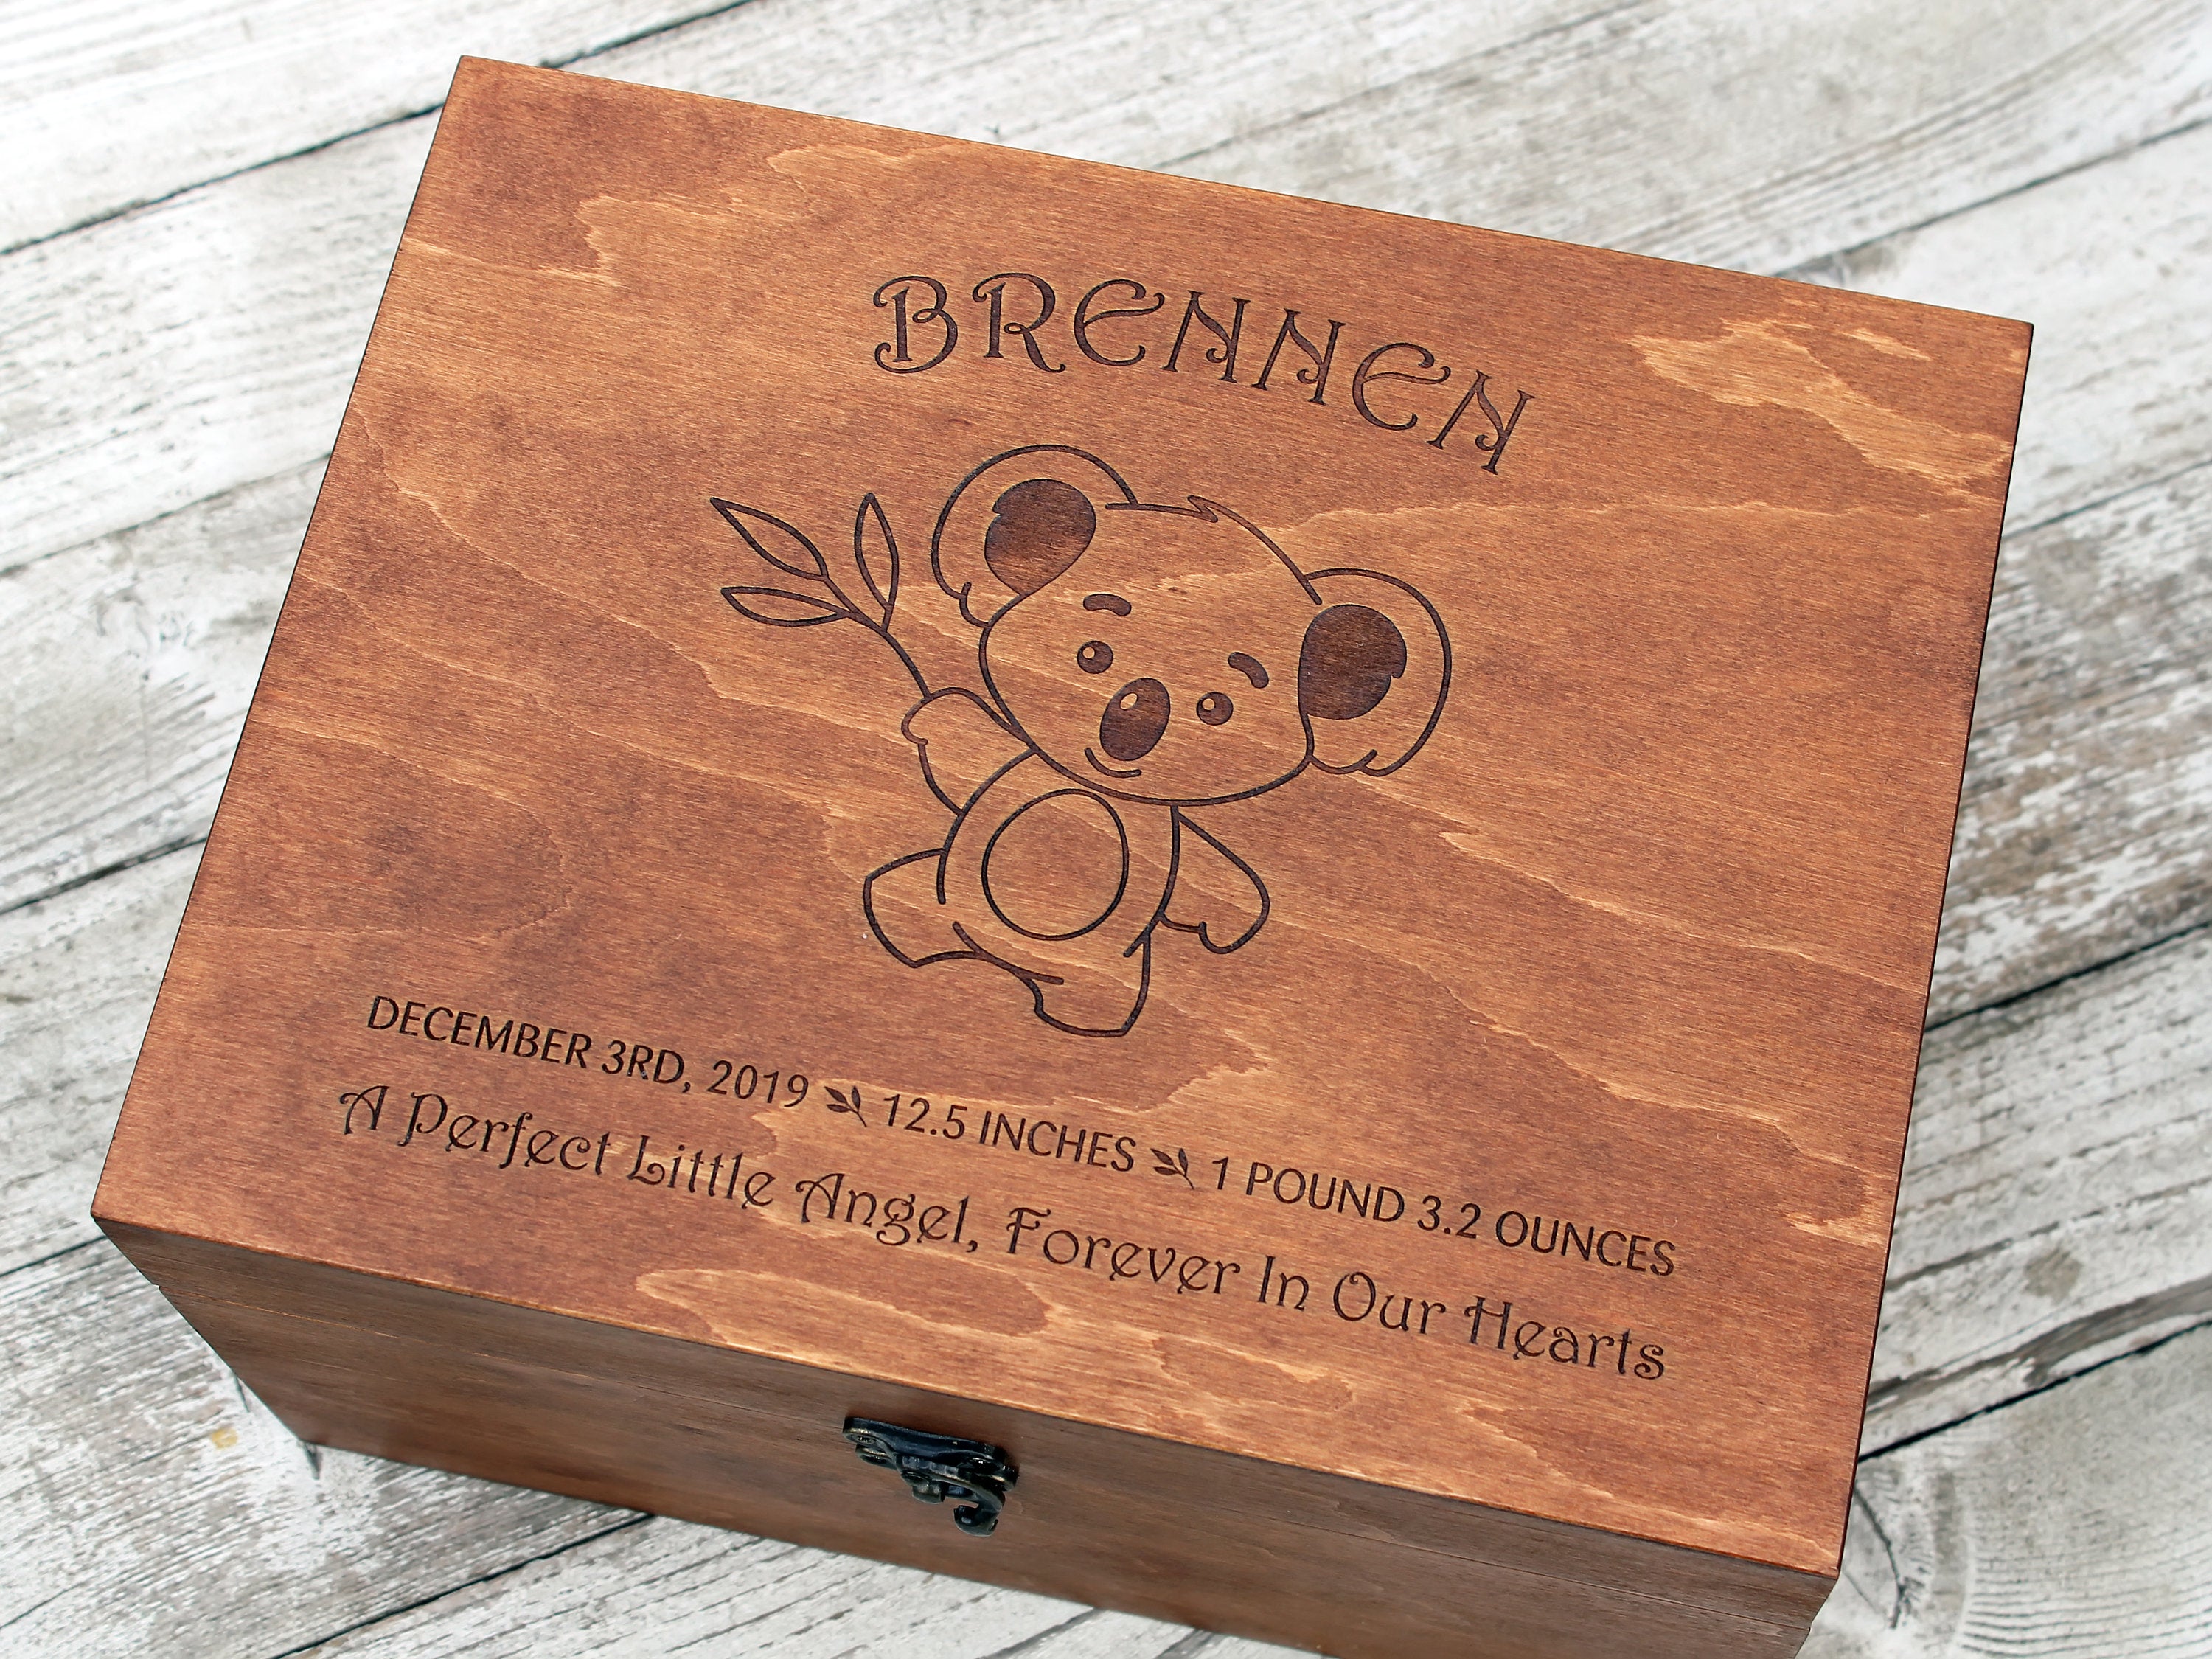 Engraved Wooden Keepsake Box